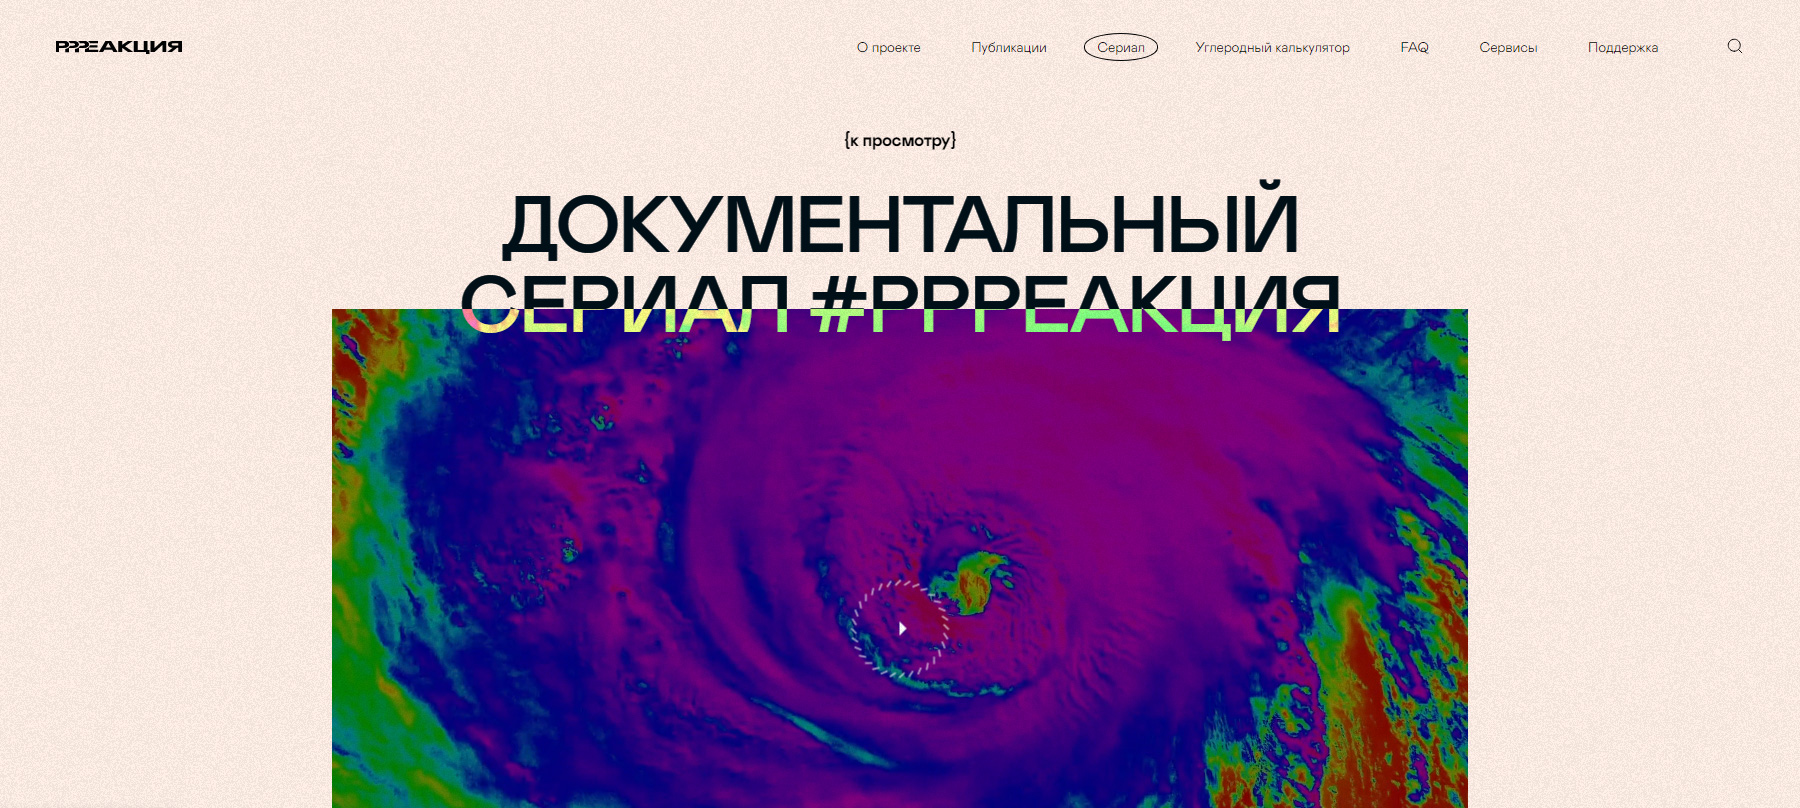 #RRREAKCIYA Greenpeace - Website of the Day